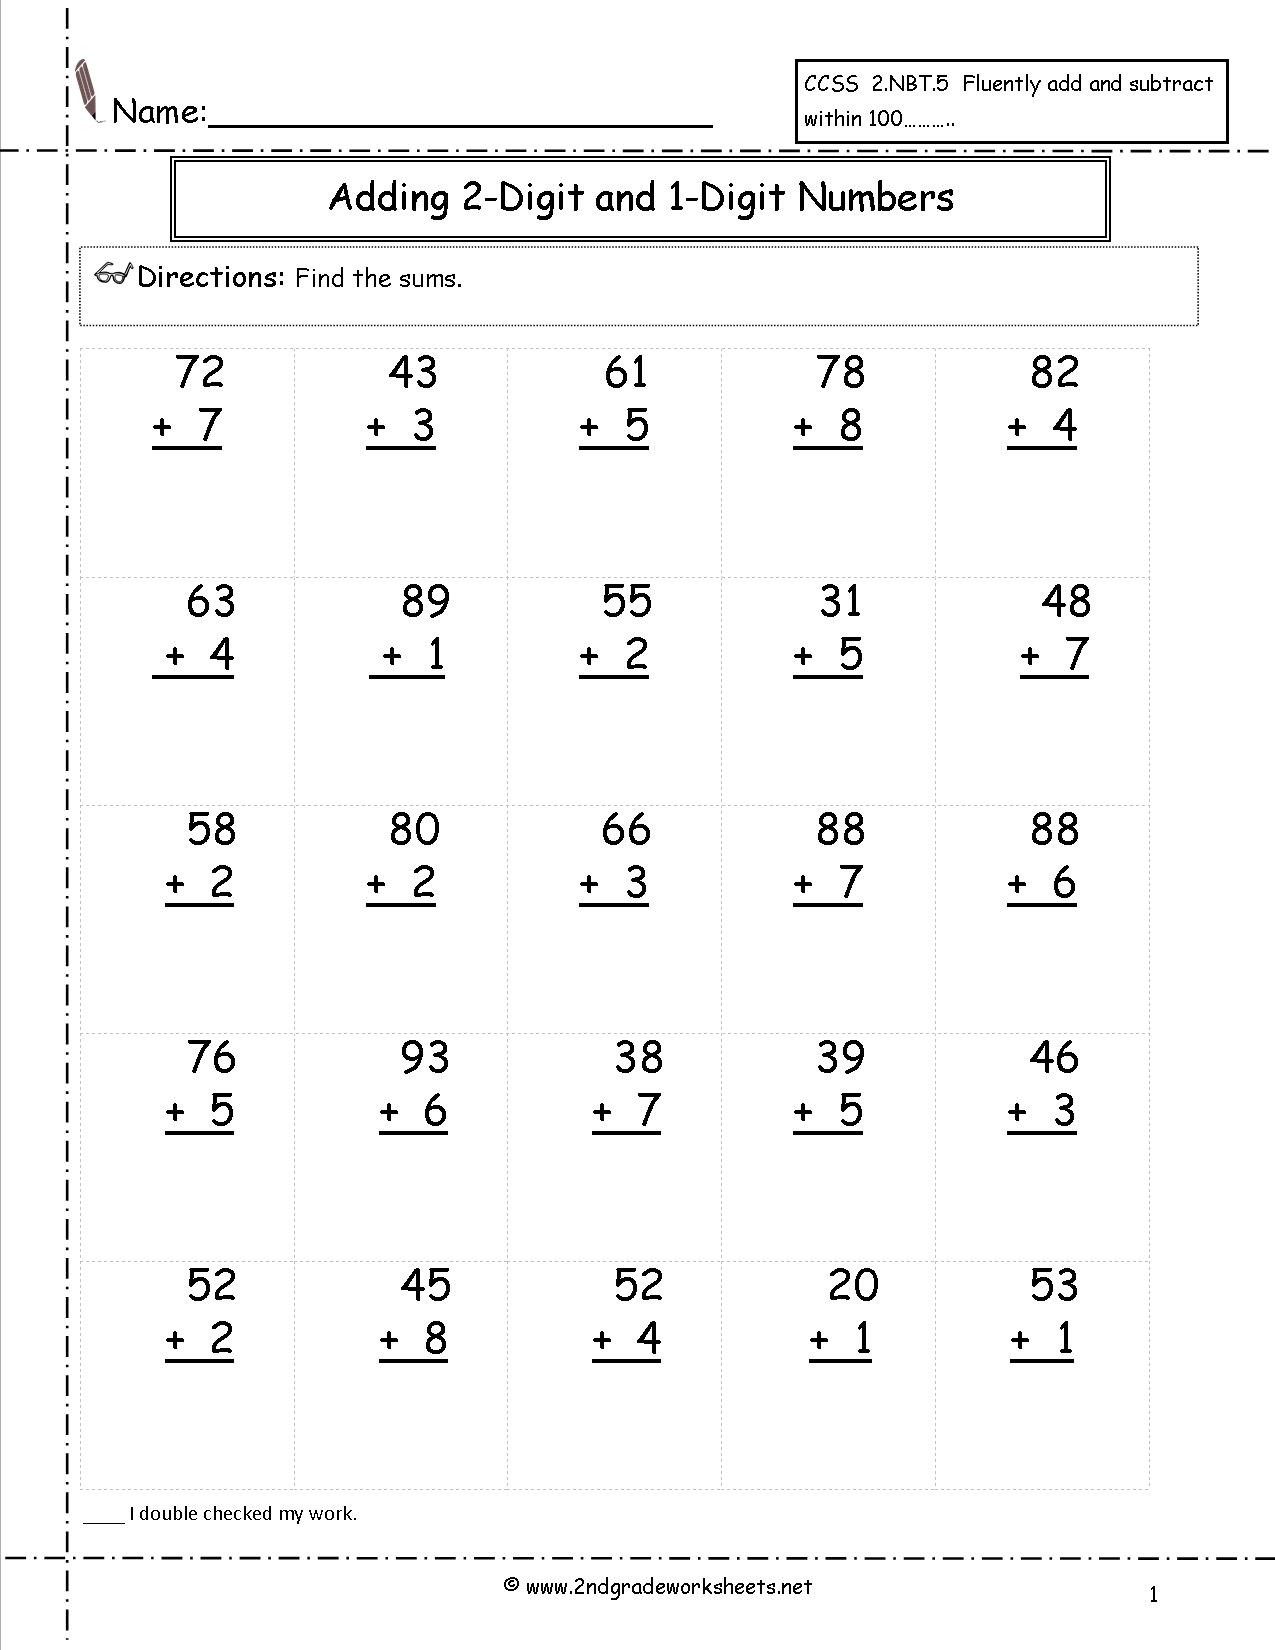 Adding 2-Digit Numbers Worksheet Image